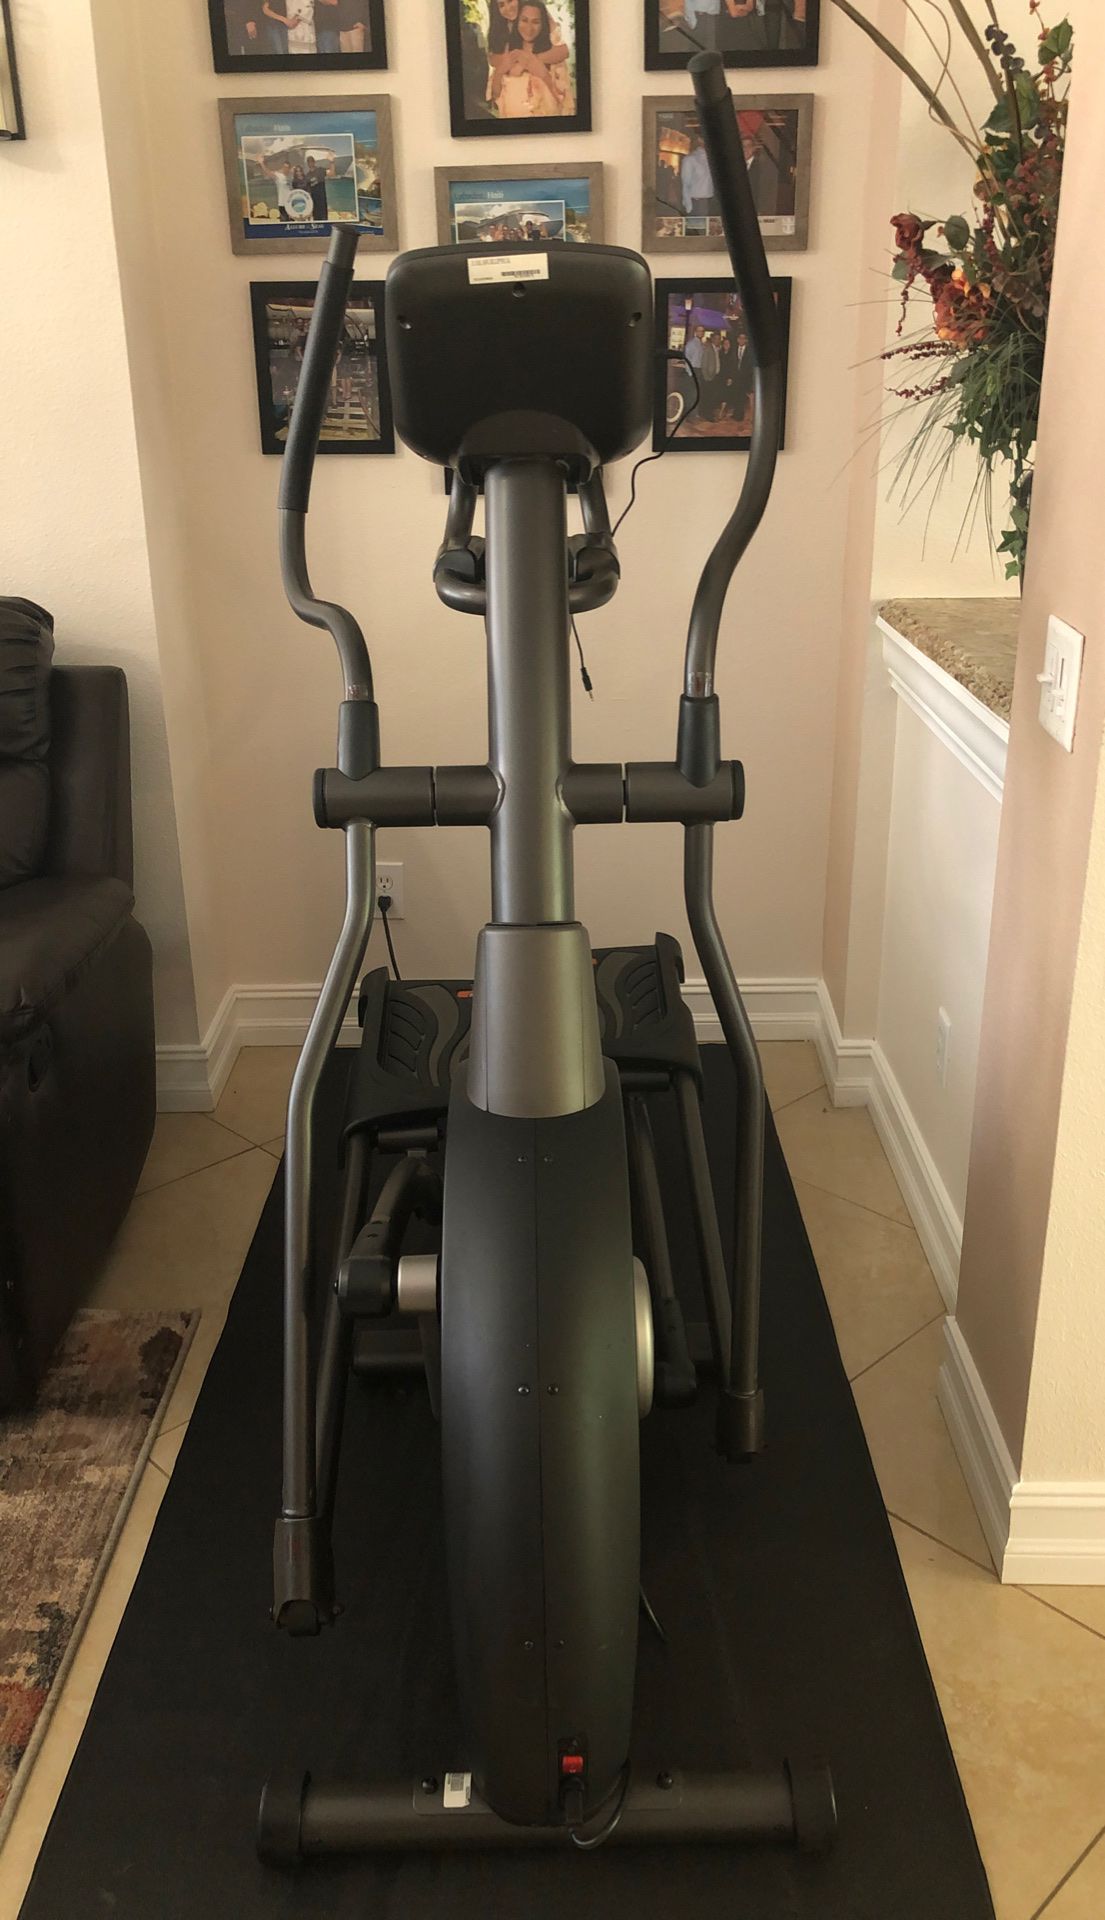 elliptical workout machine